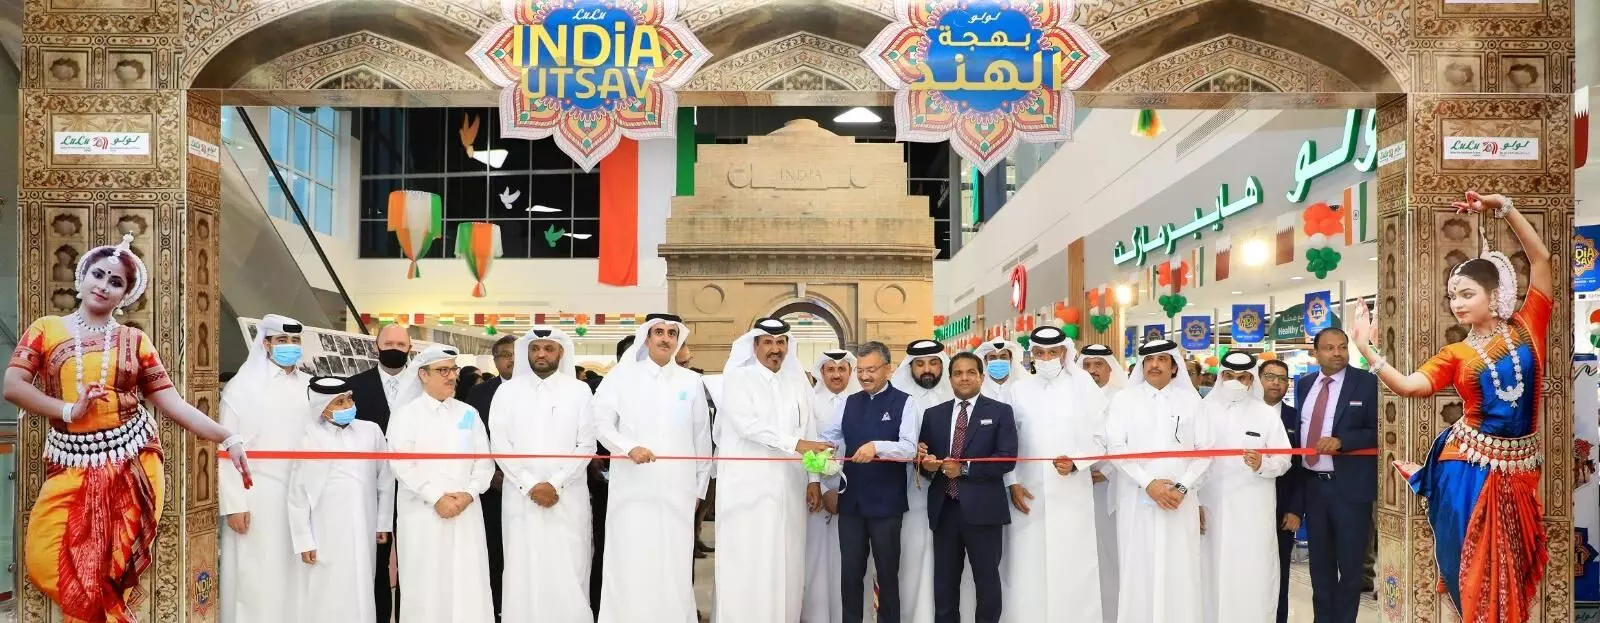 Indian celebration time across the gulf: LuLu set to launch India Utsav